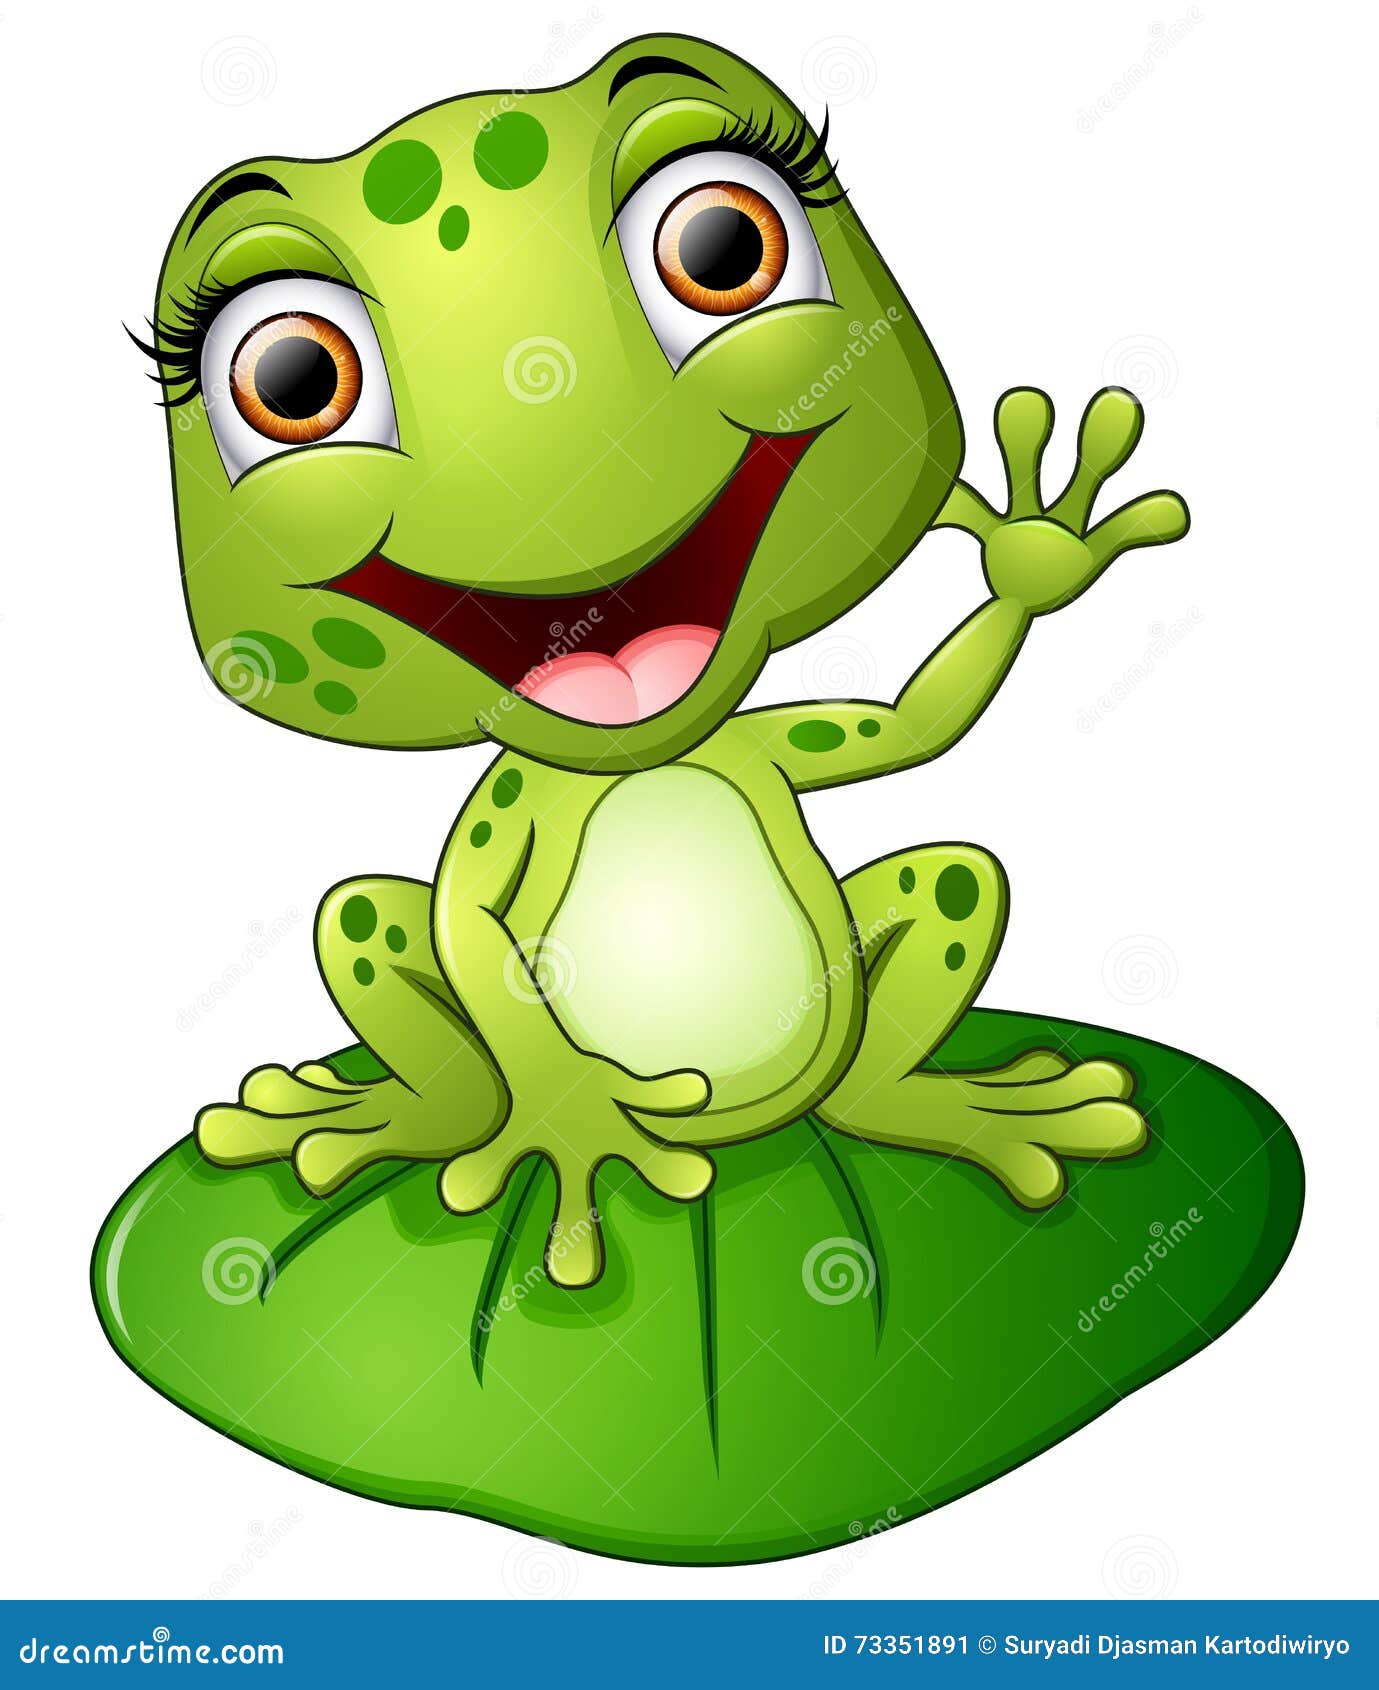 Cartoon Frog Sitting on the Leaf Stock Vector - Illustration of tropical,  cartoon: 73351891